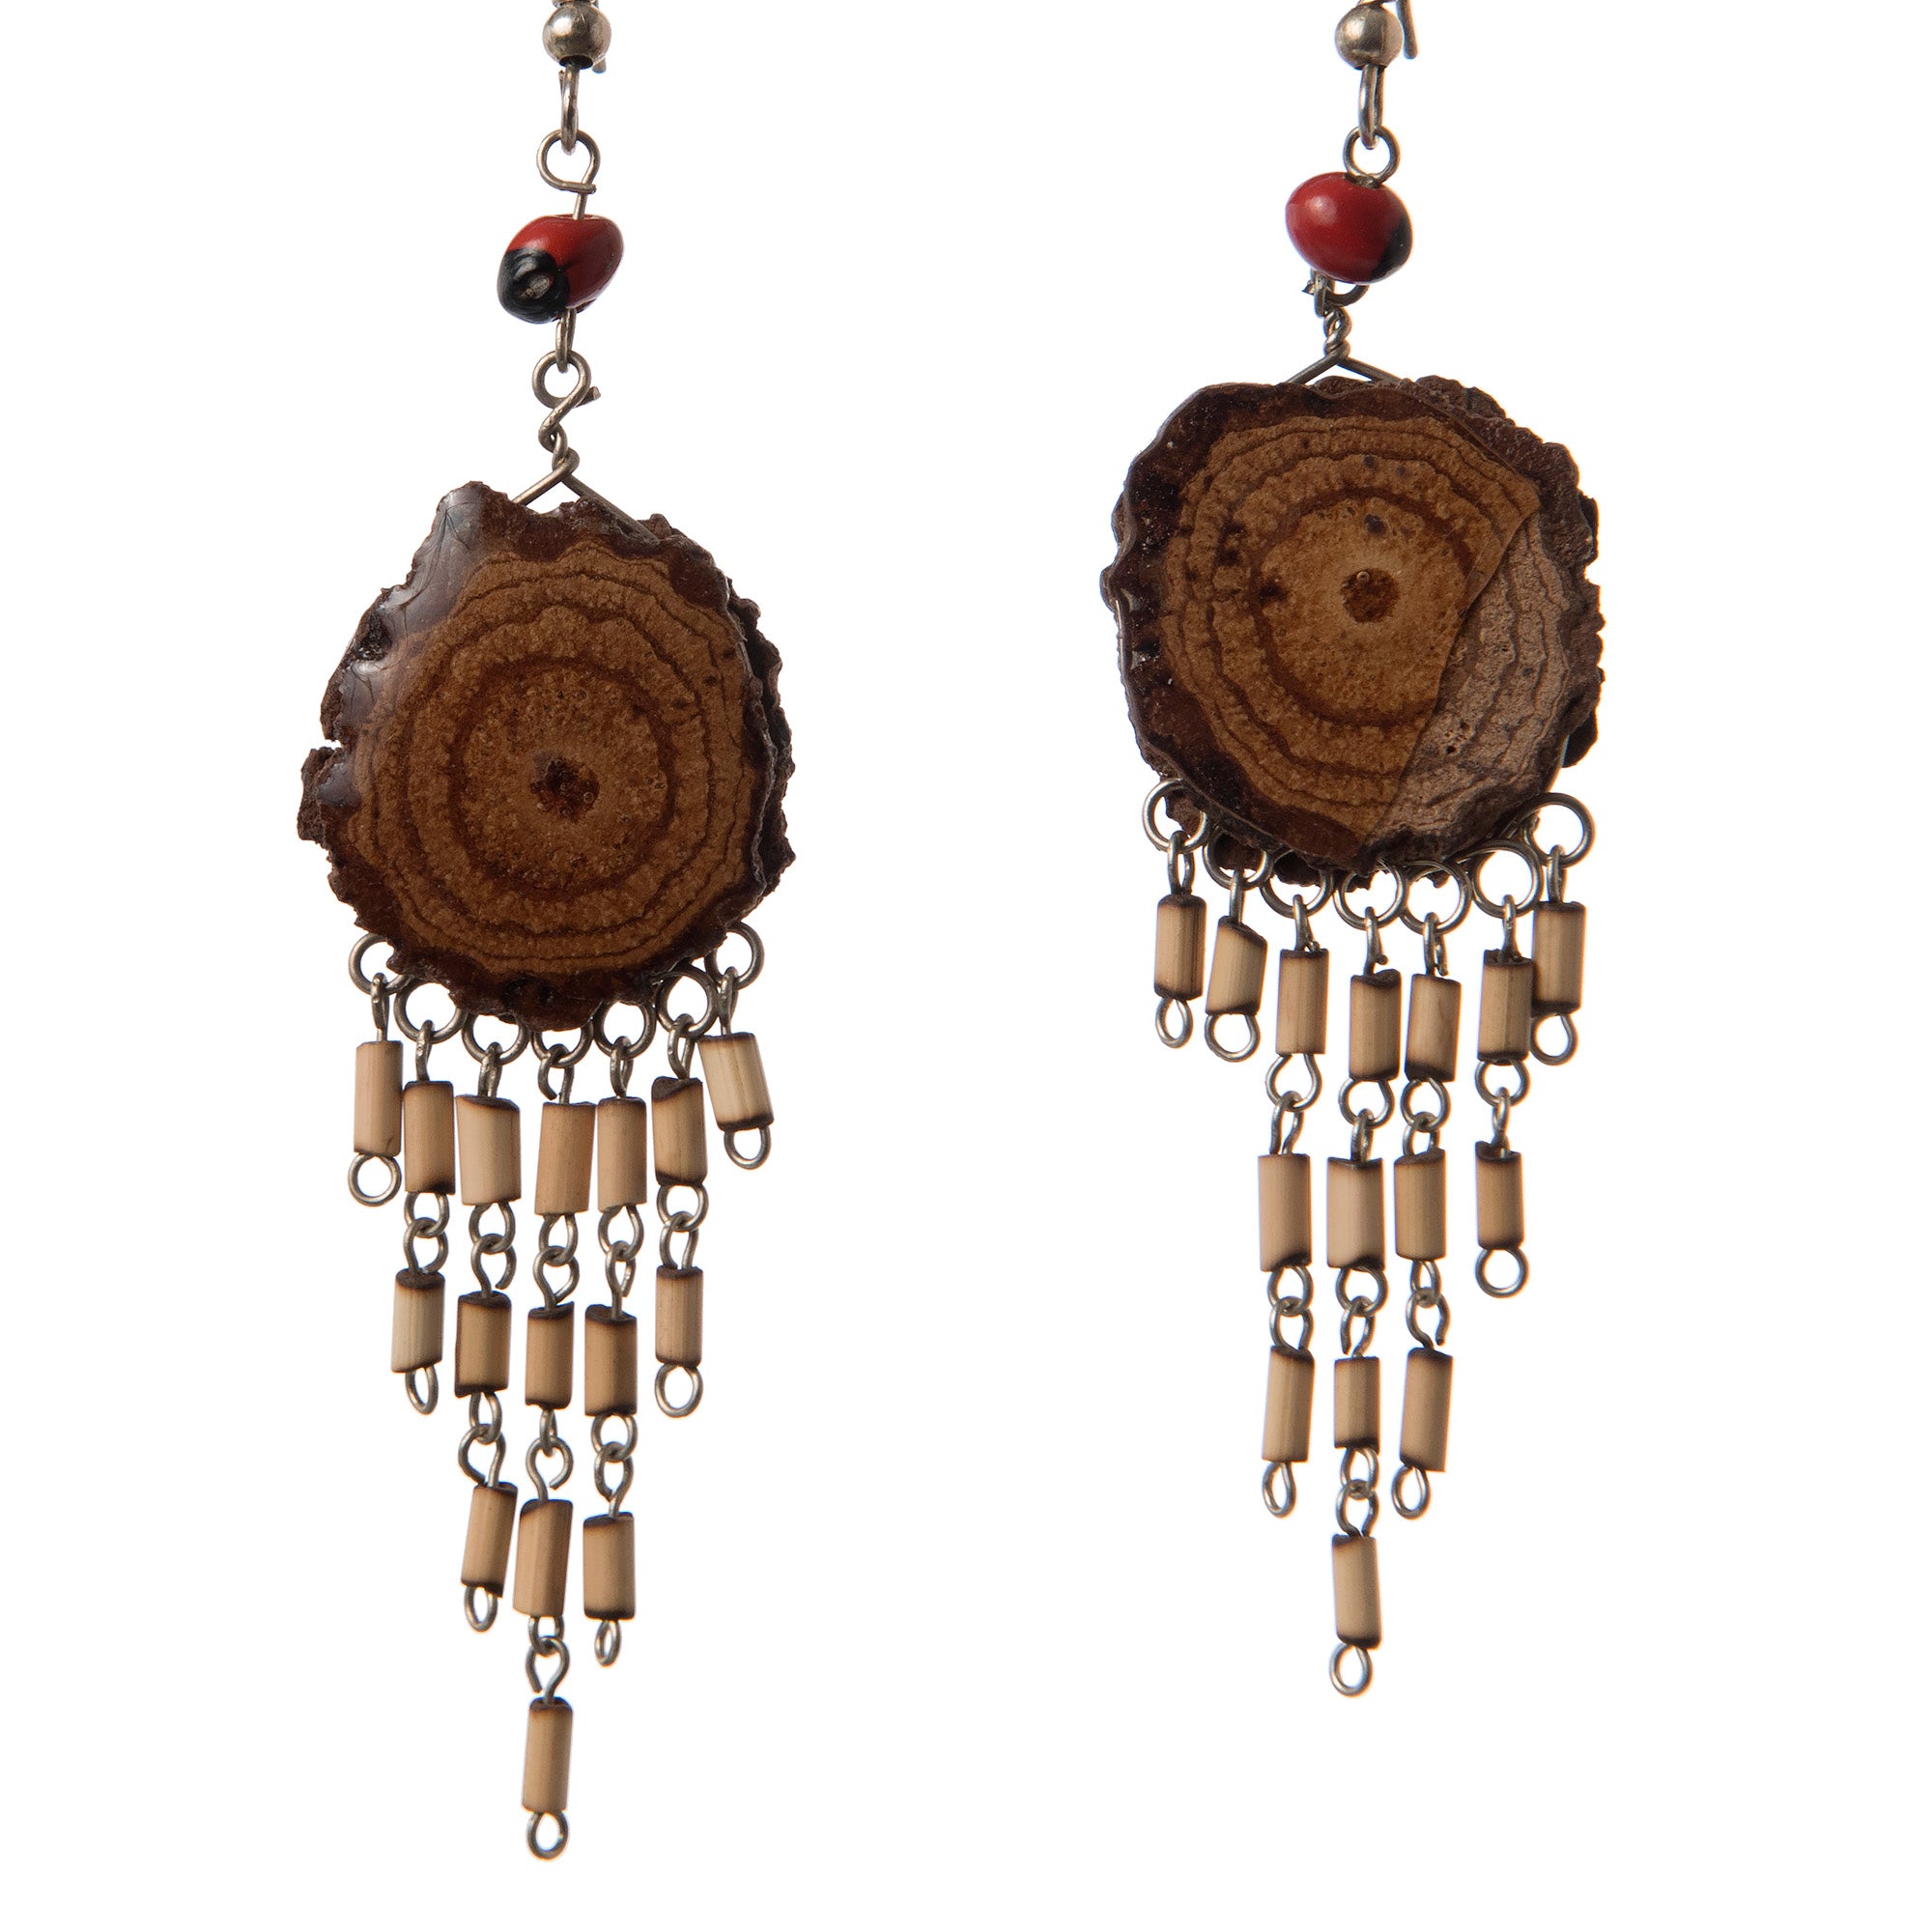 Sapo Huasca and Rainforest Vine Earrings, Large Size